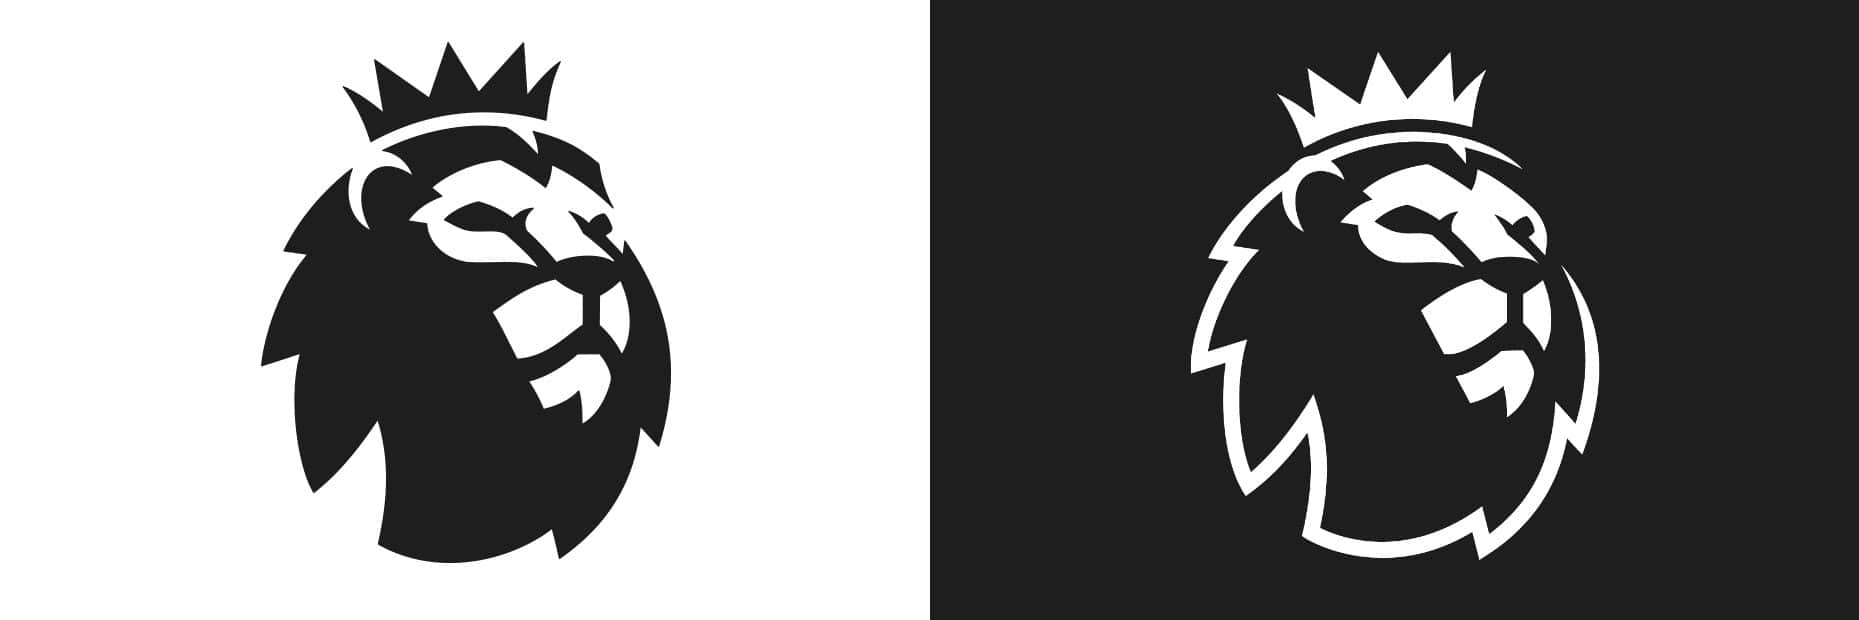 A Designers Guide to Creating Logo Files | Logo Geek